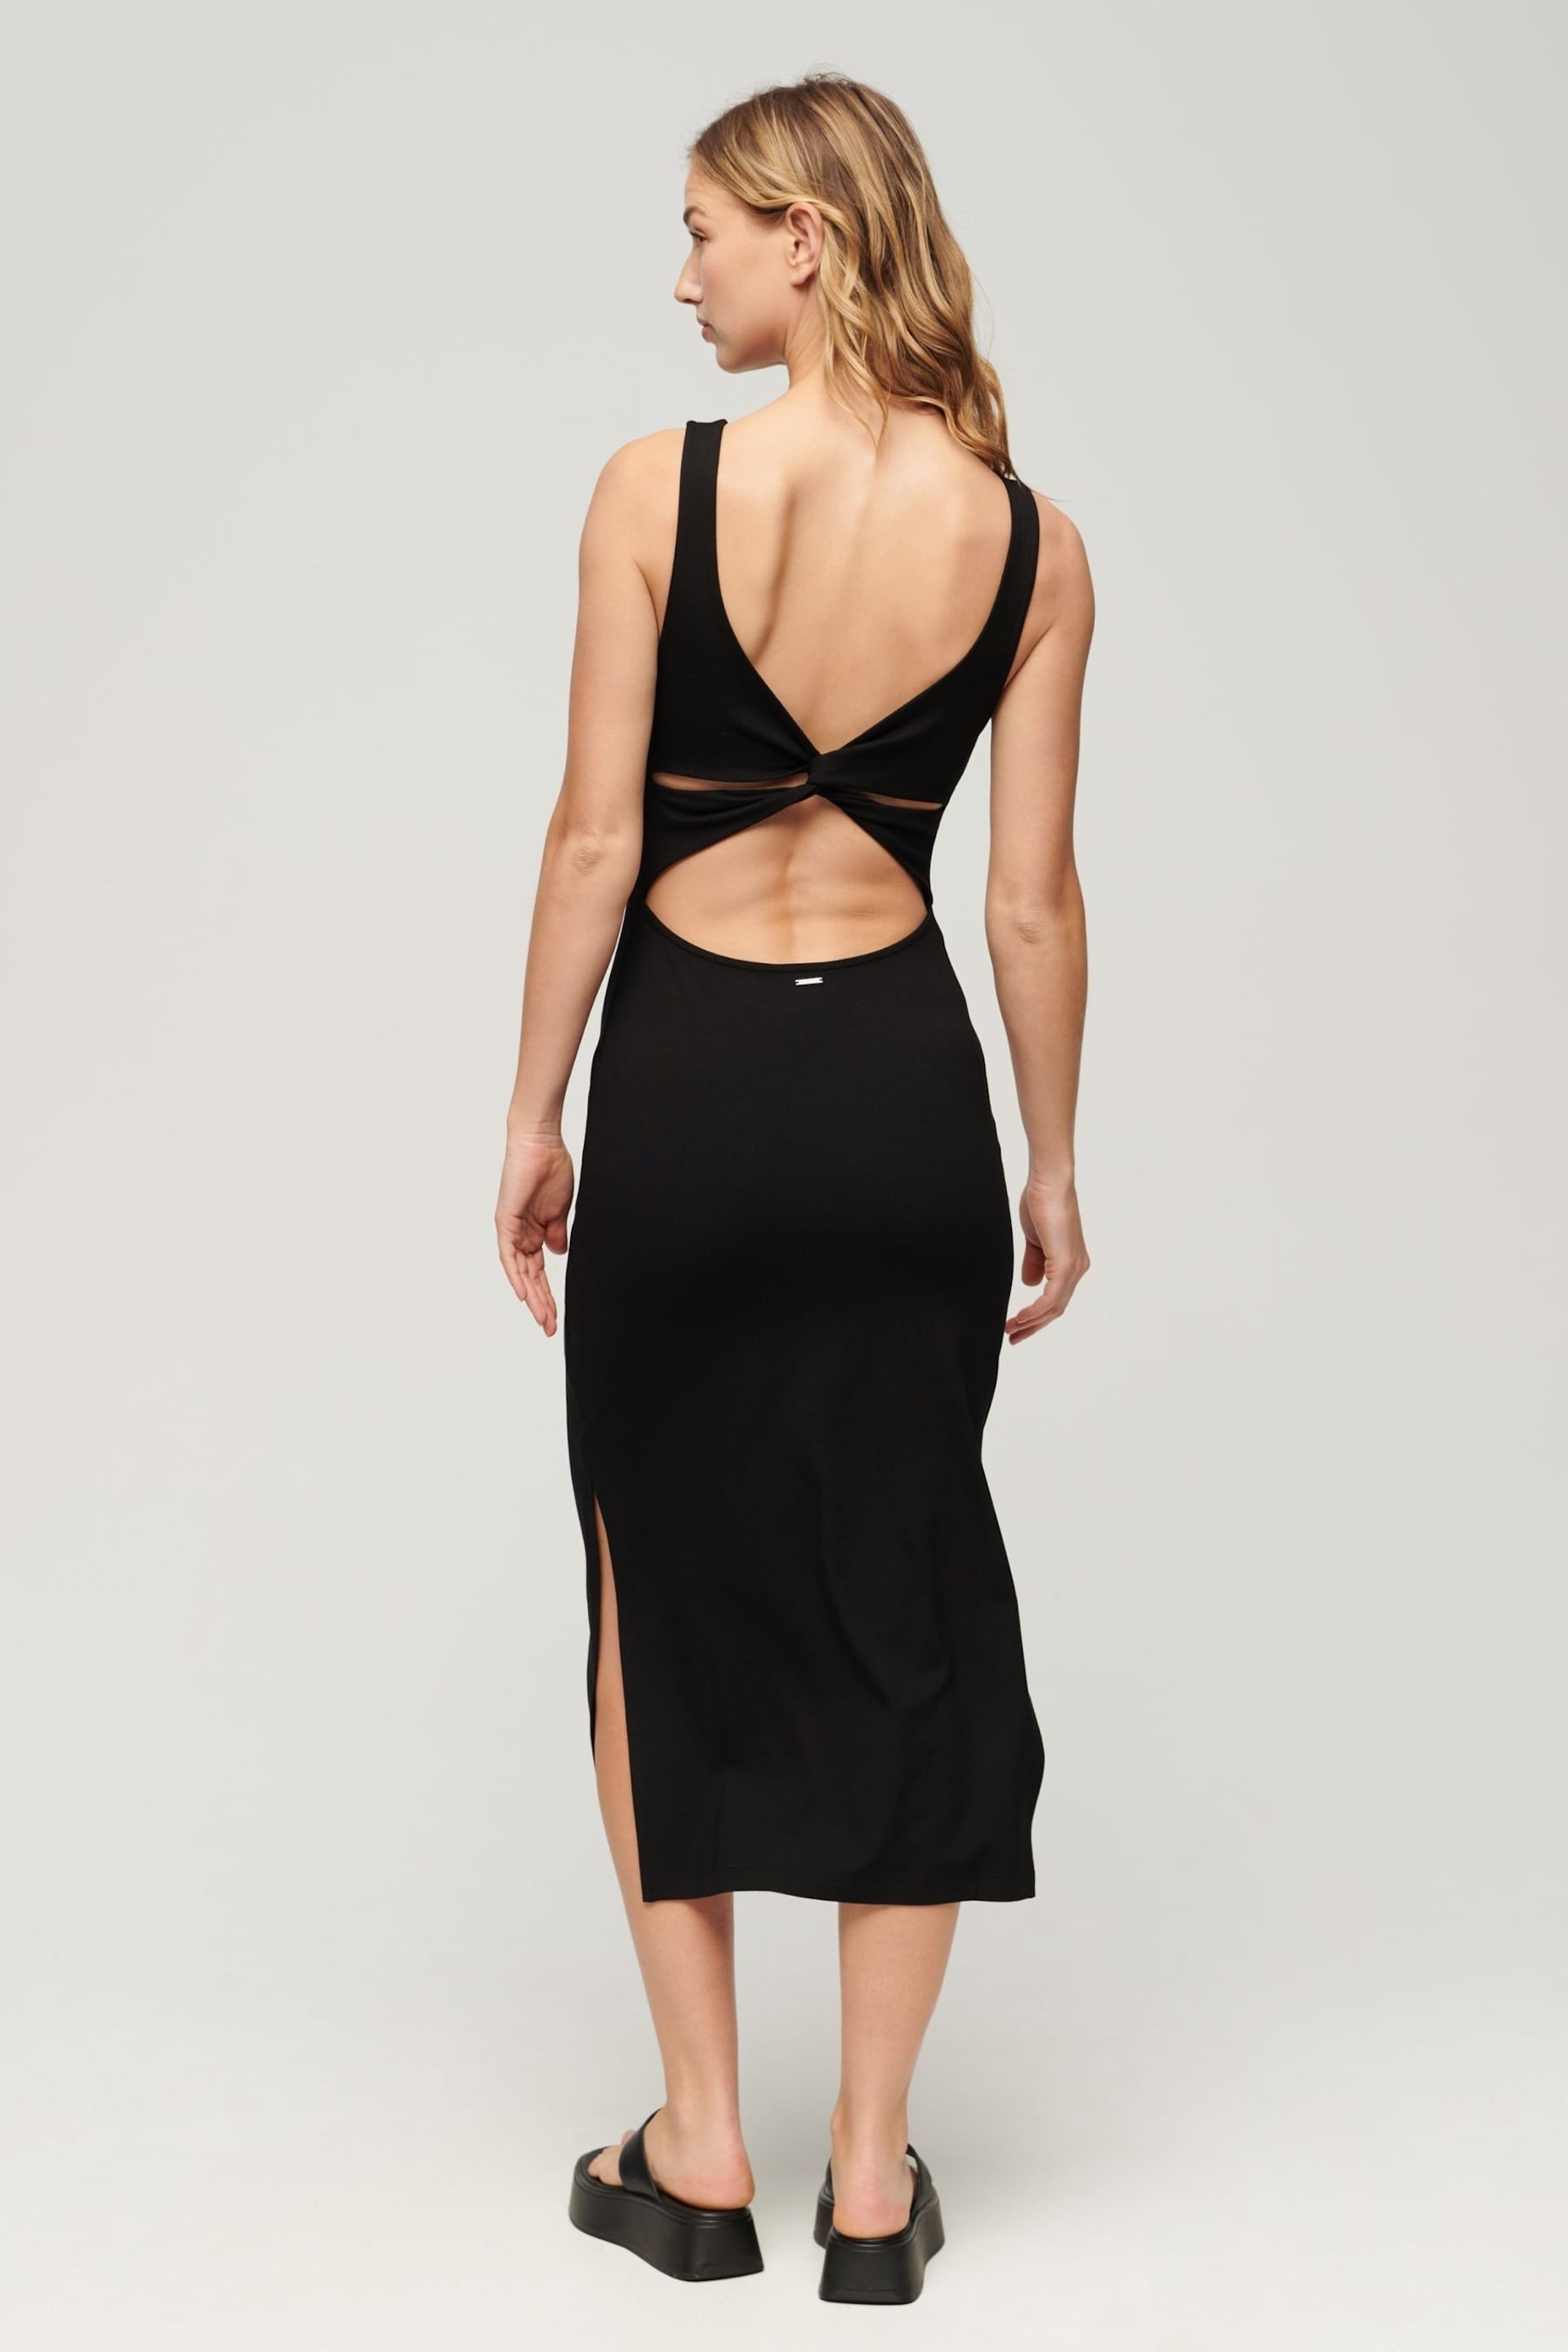 Superdry Black Jersey Twist Back Midi Dress - Image 2 of 6